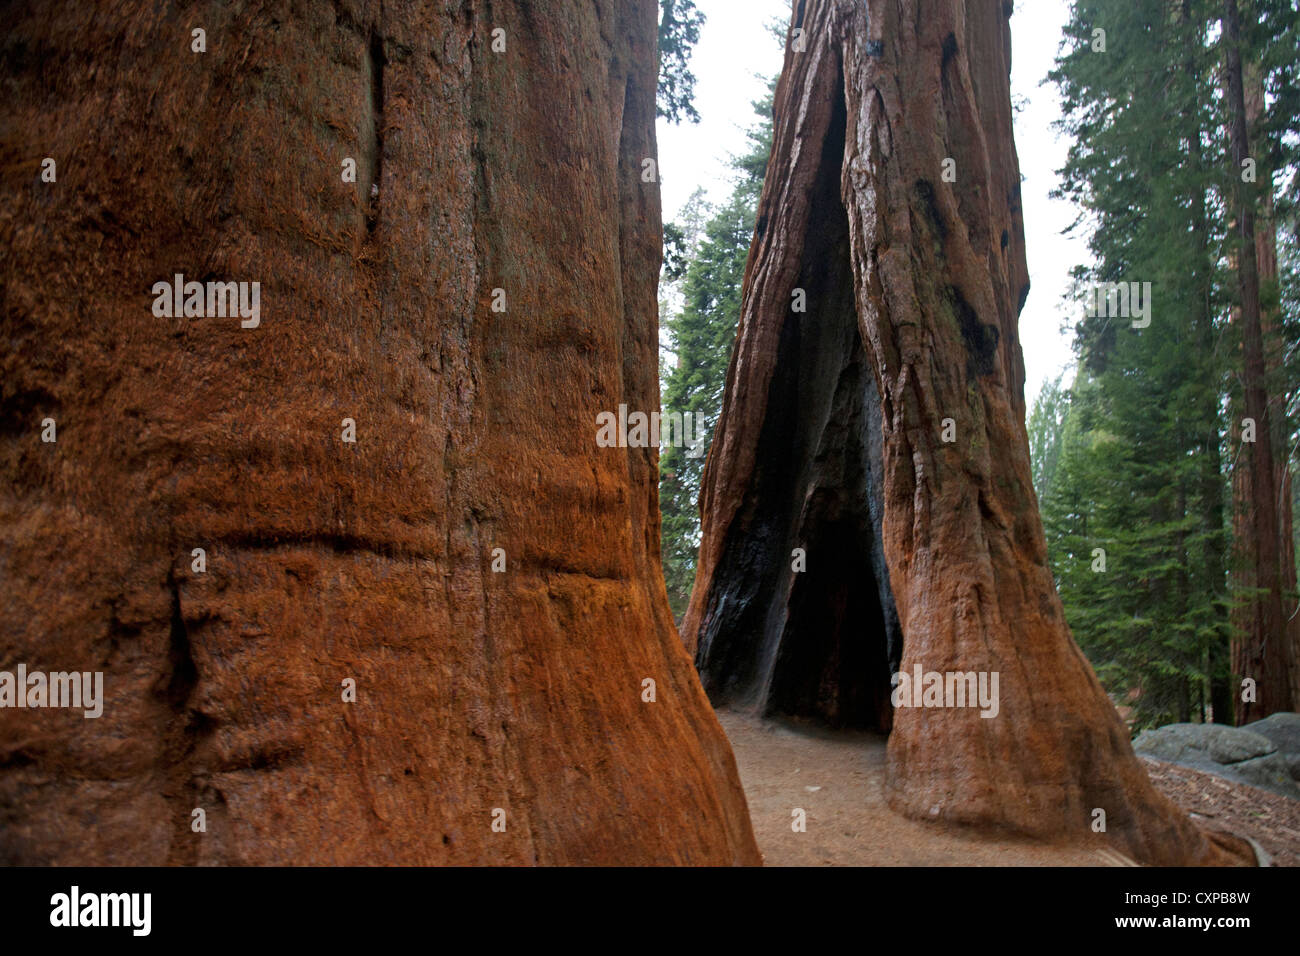 Two Giant Sequoia trees (Sequoiadendron giganteum), Sequoia National Park, California, United States of America Stock Photo